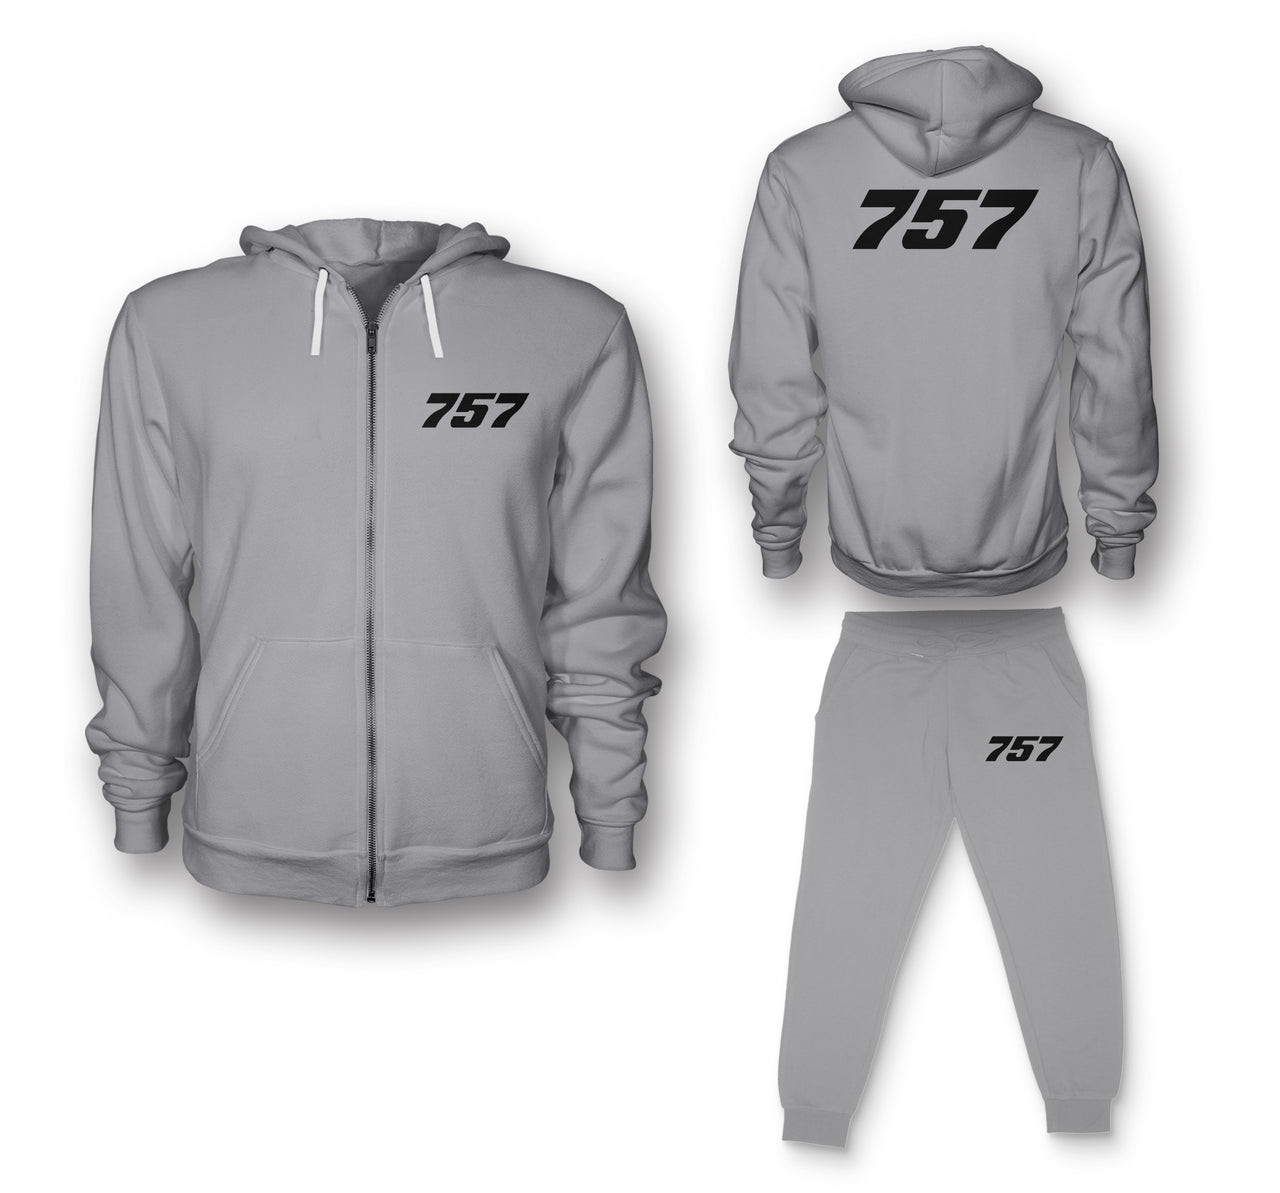 757 Flat Text Designed Zipped Hoodies & Sweatpants Set